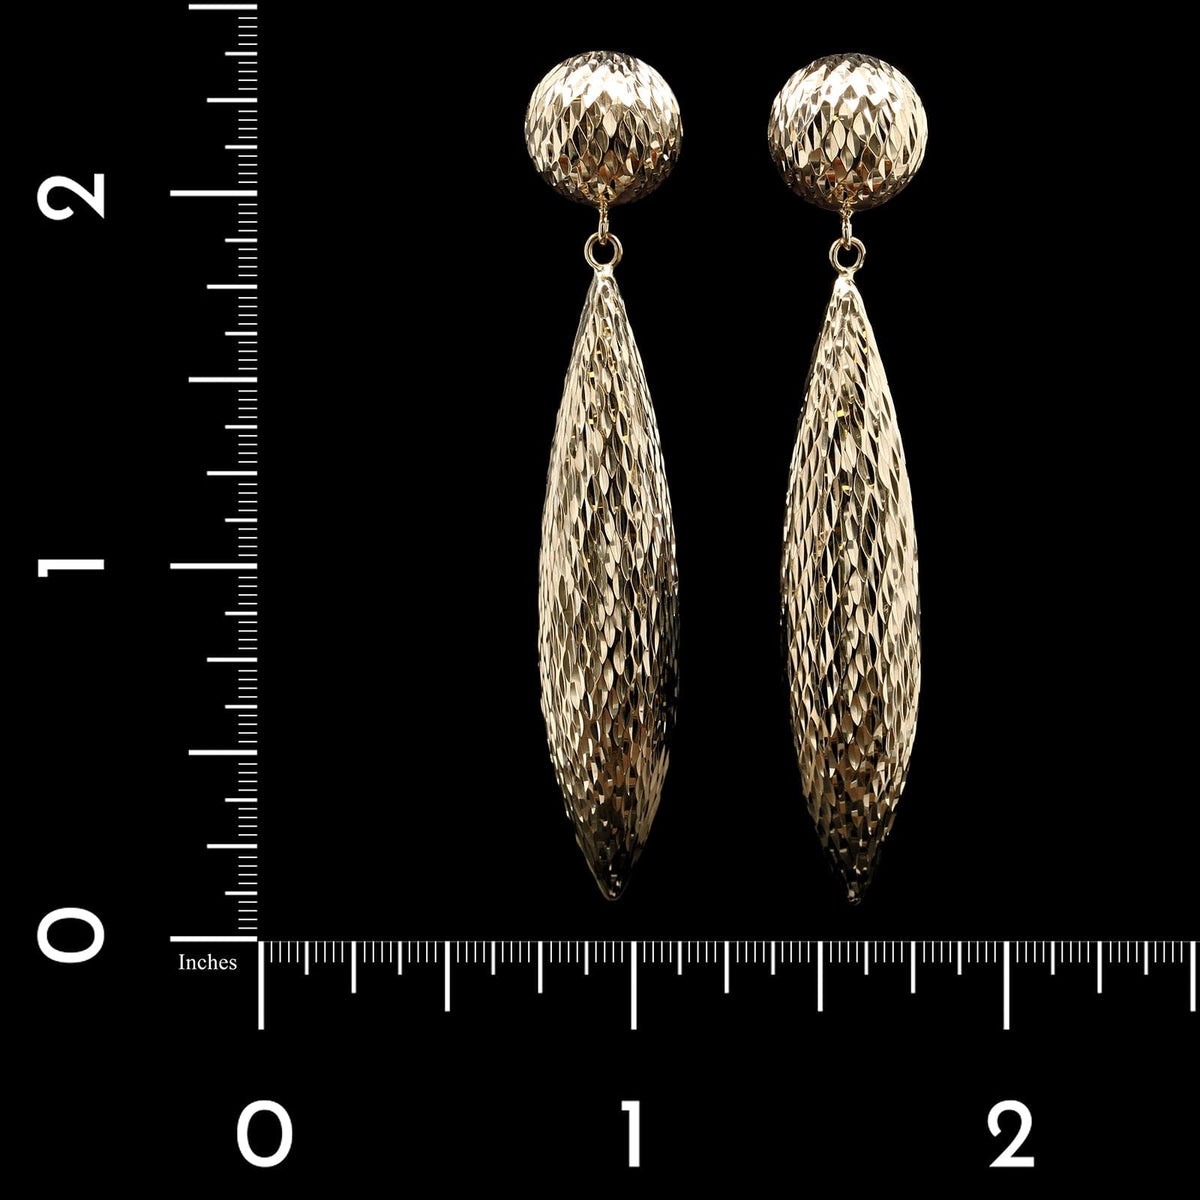 14K Yellow Gold Estate Diamond Cut Drop Earrings